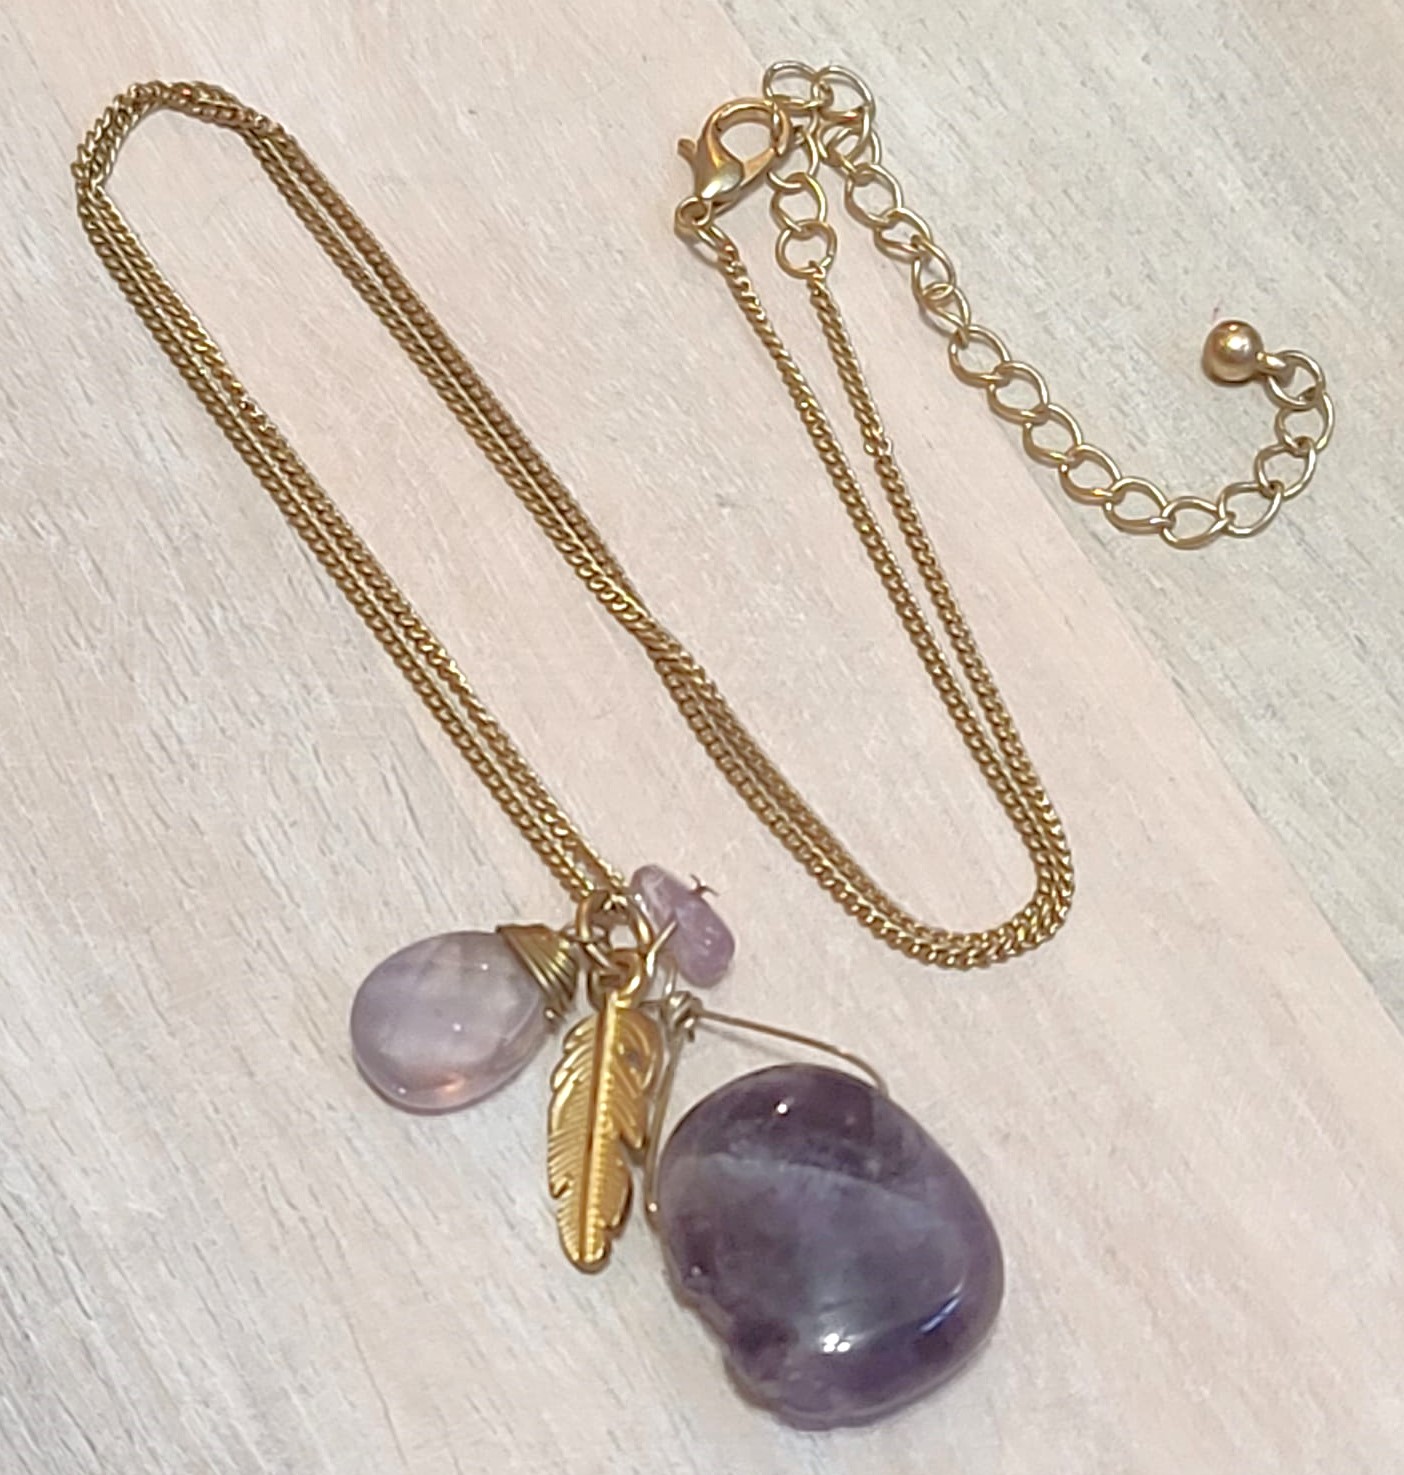 Gemstone pendant necklace, amethyst gemstone pendant, with feather charm, necklace